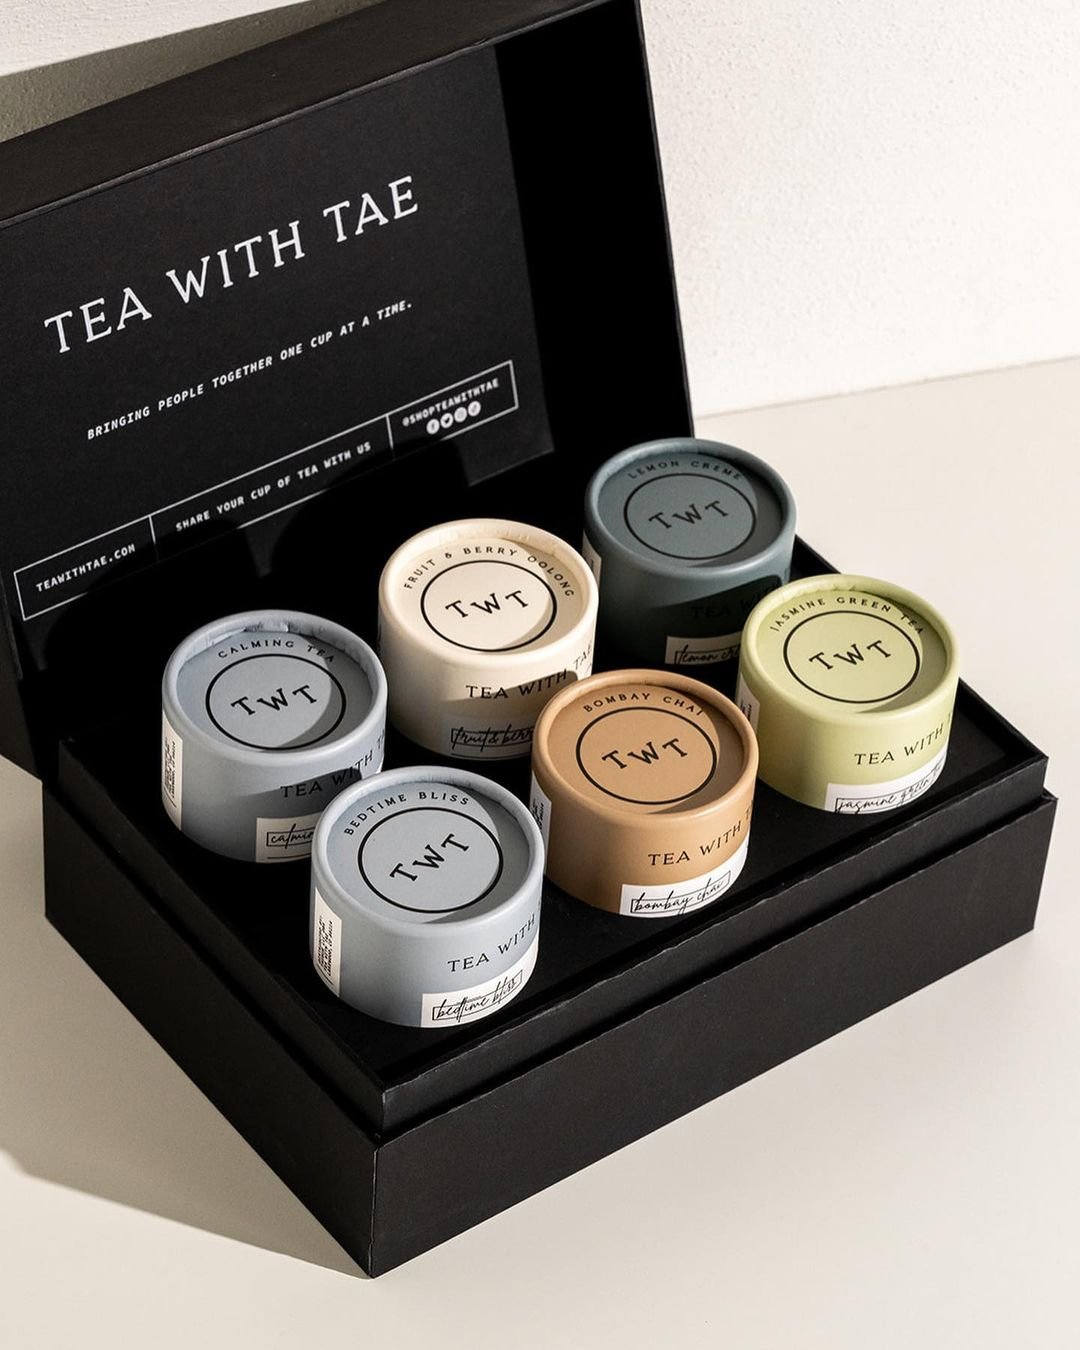 Tea with Tae